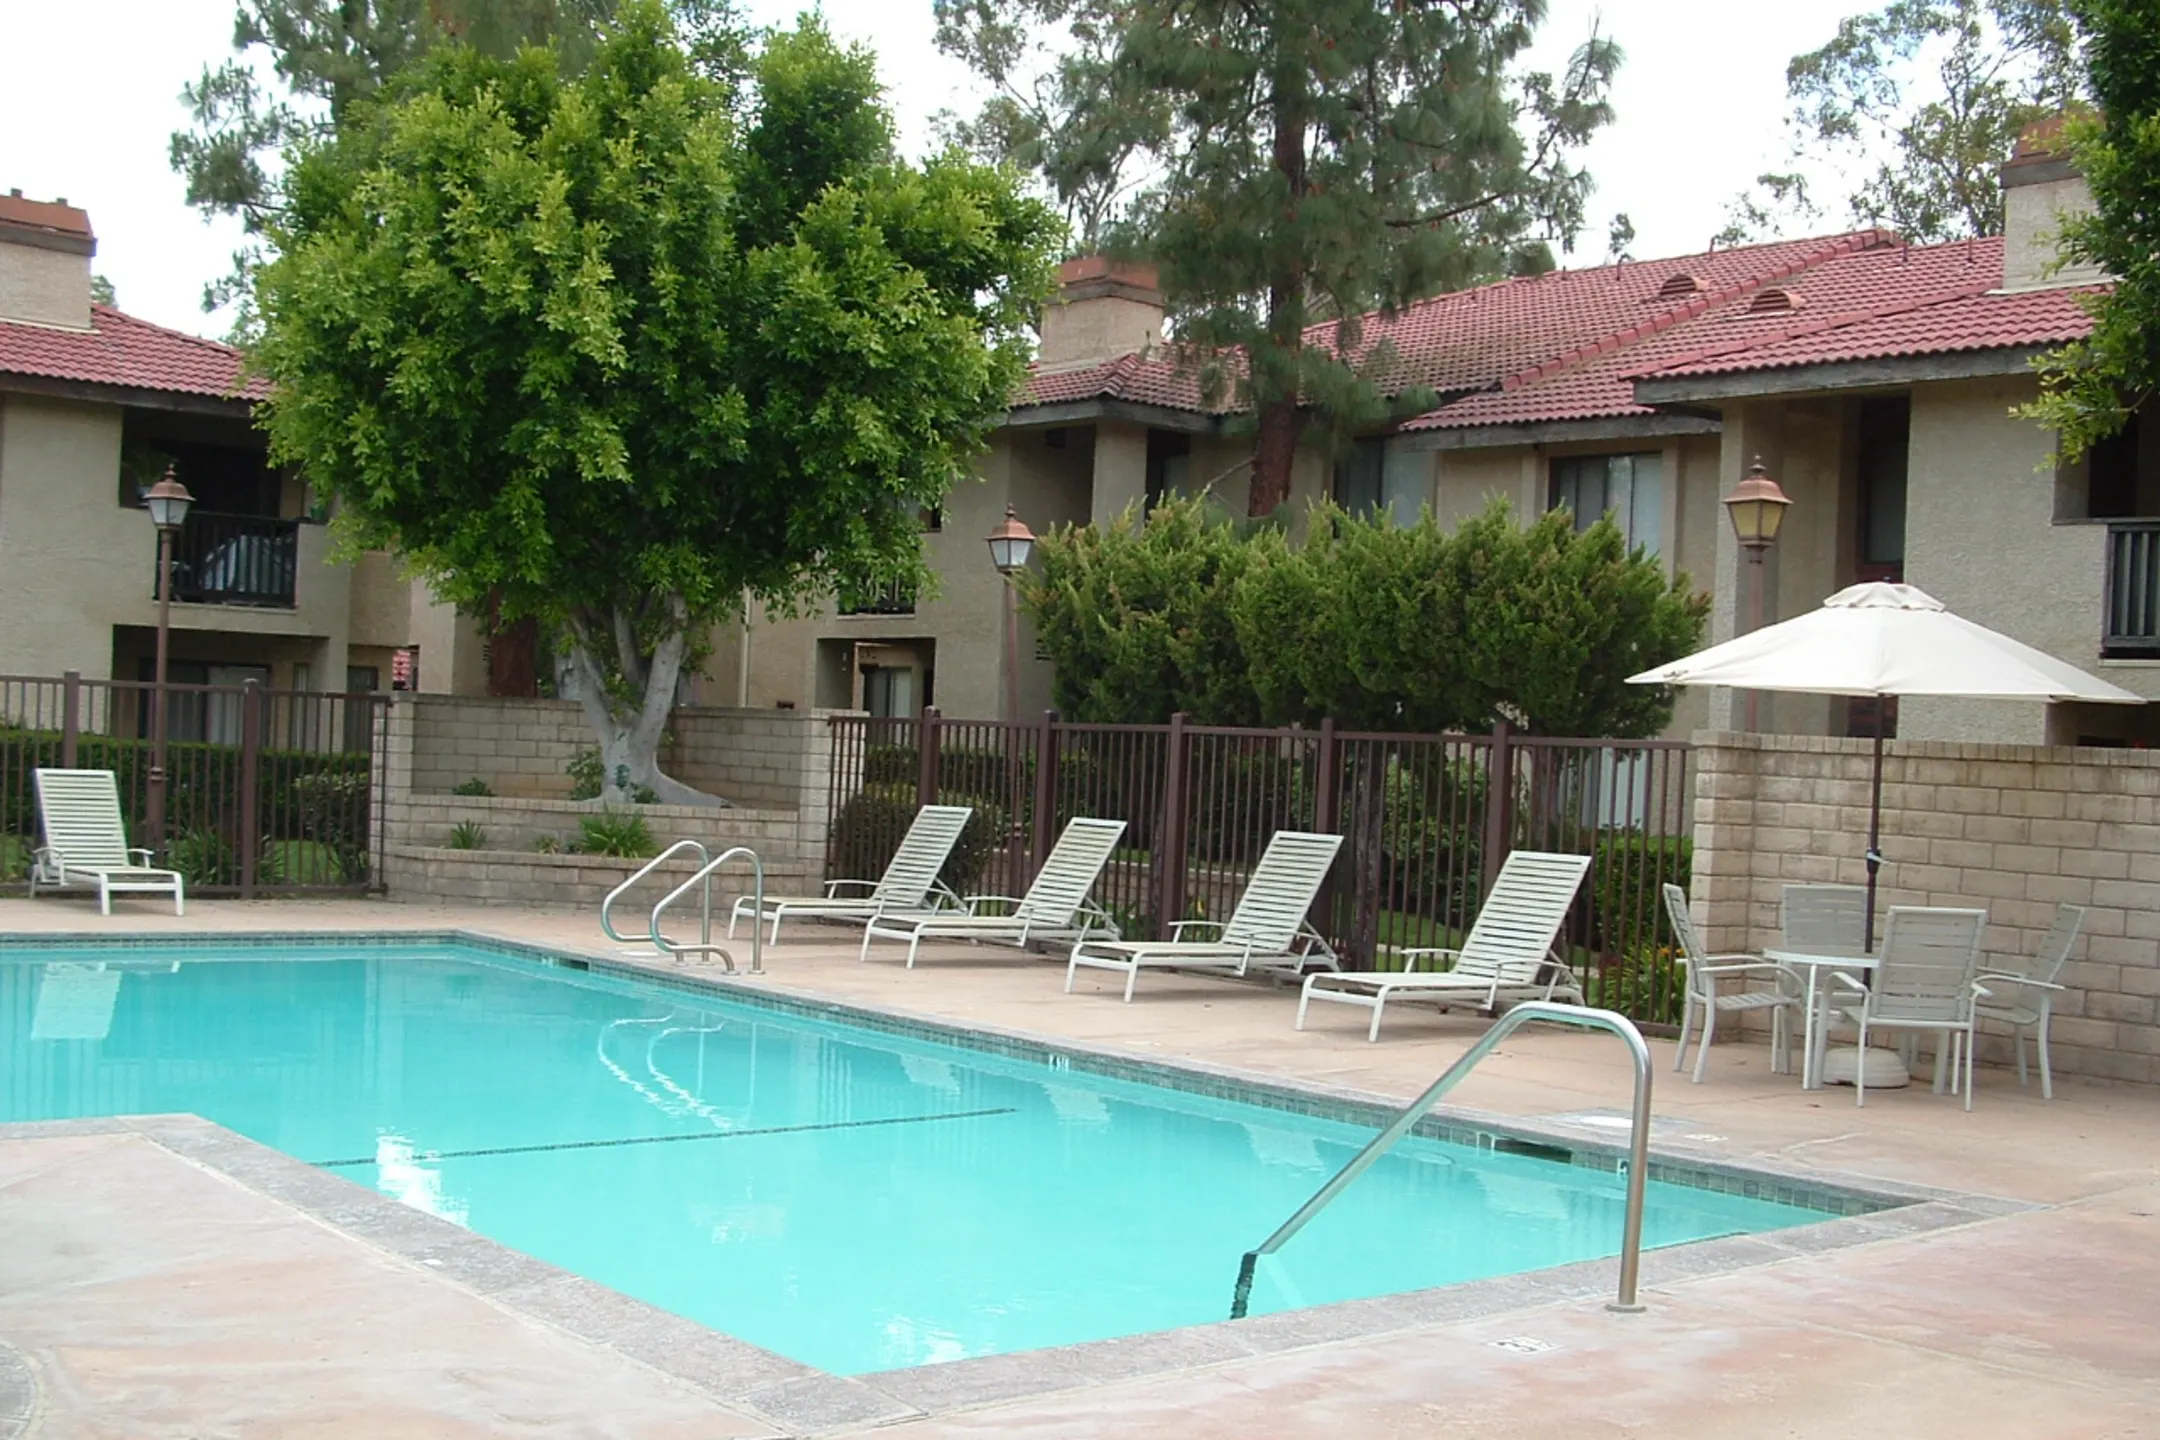 Pool - Baywood Apartments - Simi Valley, CA